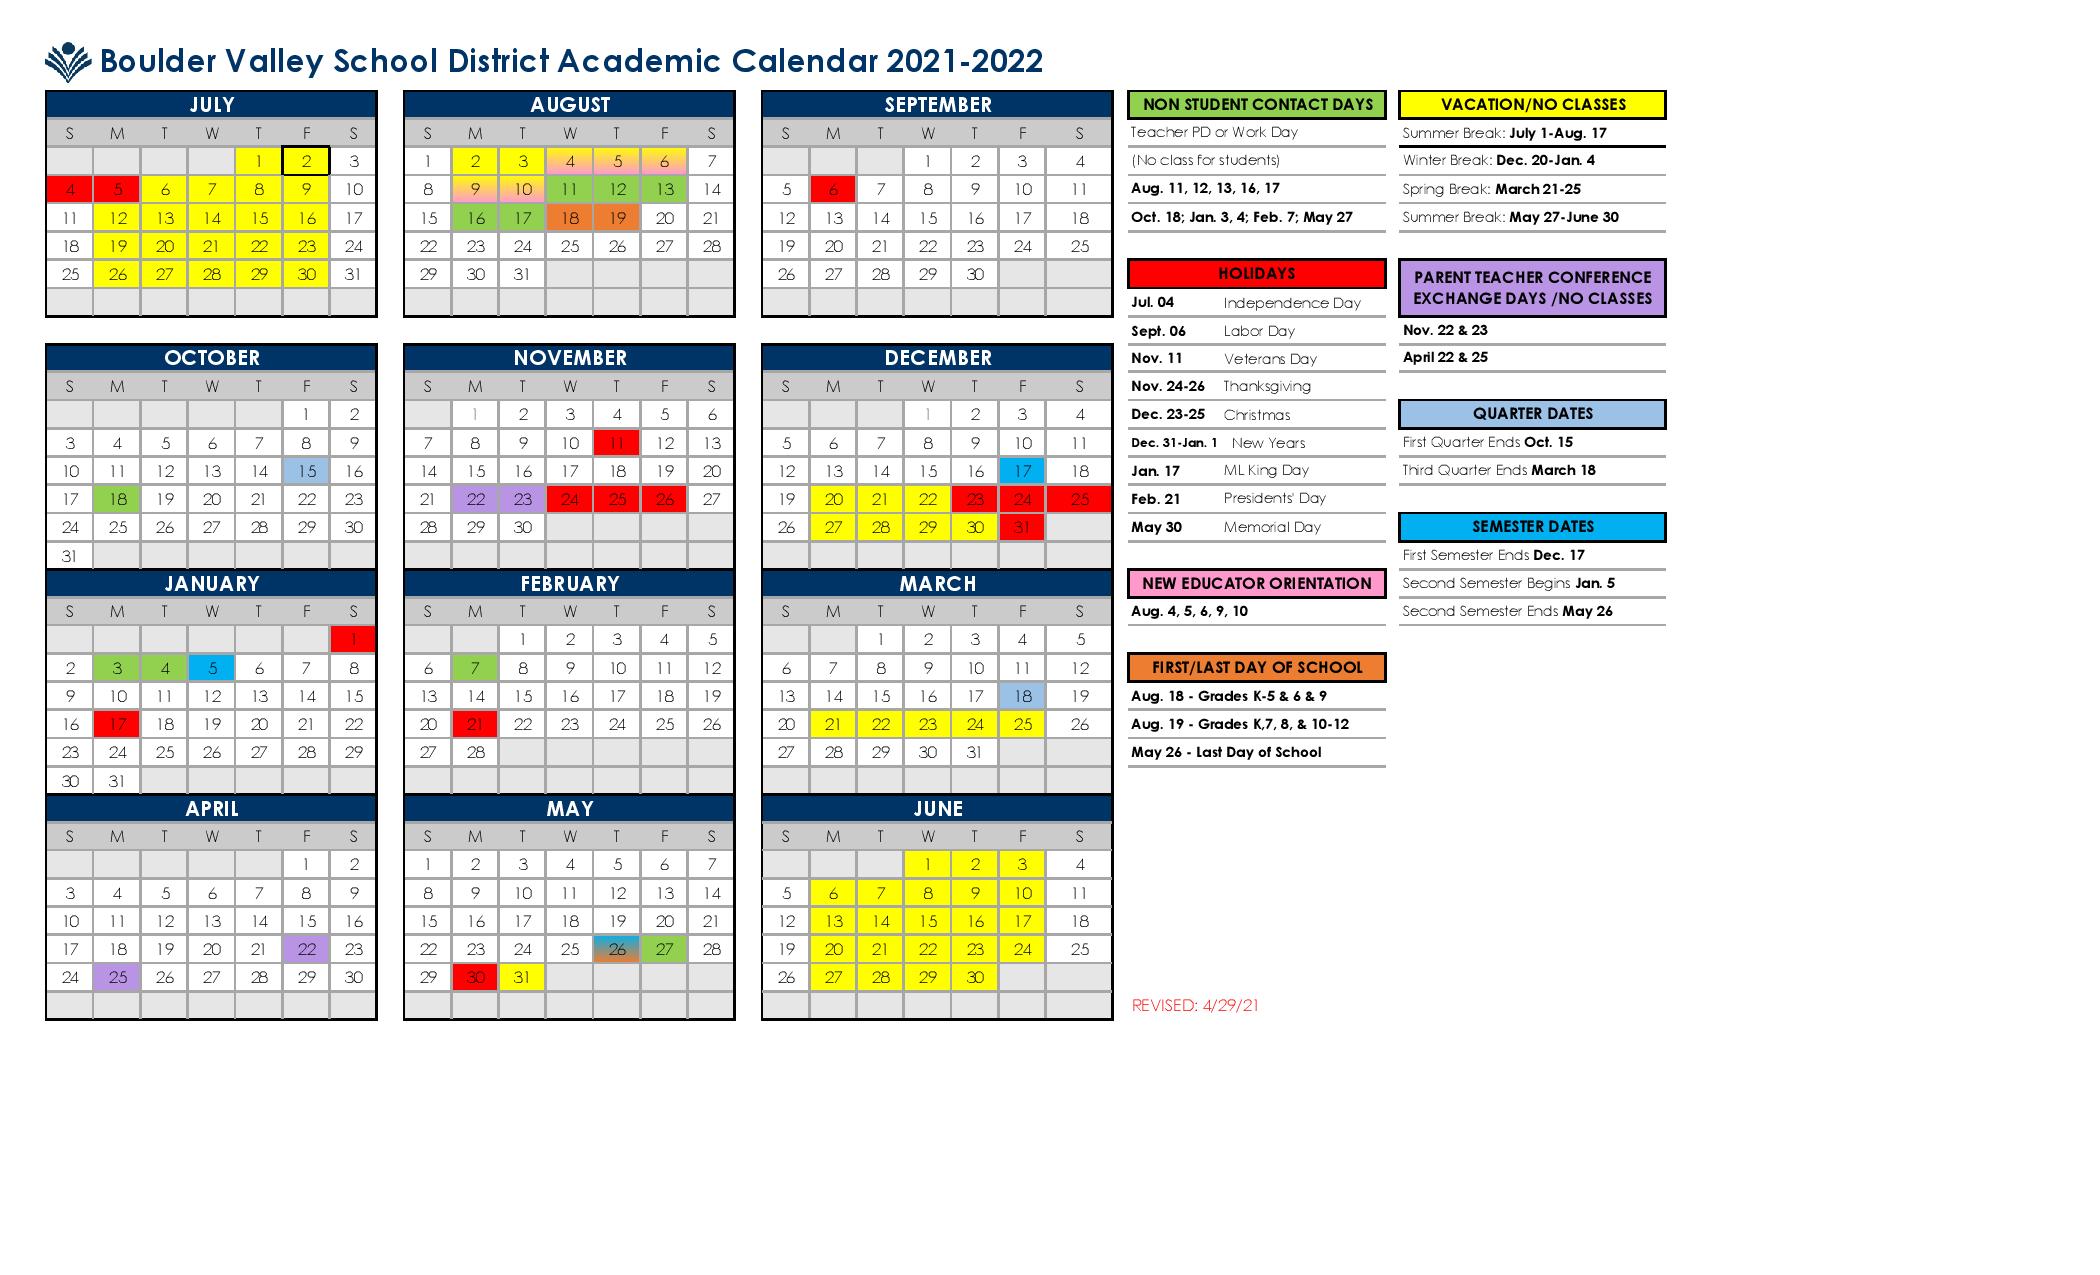 Boulder Valley School District Calendar 20212022